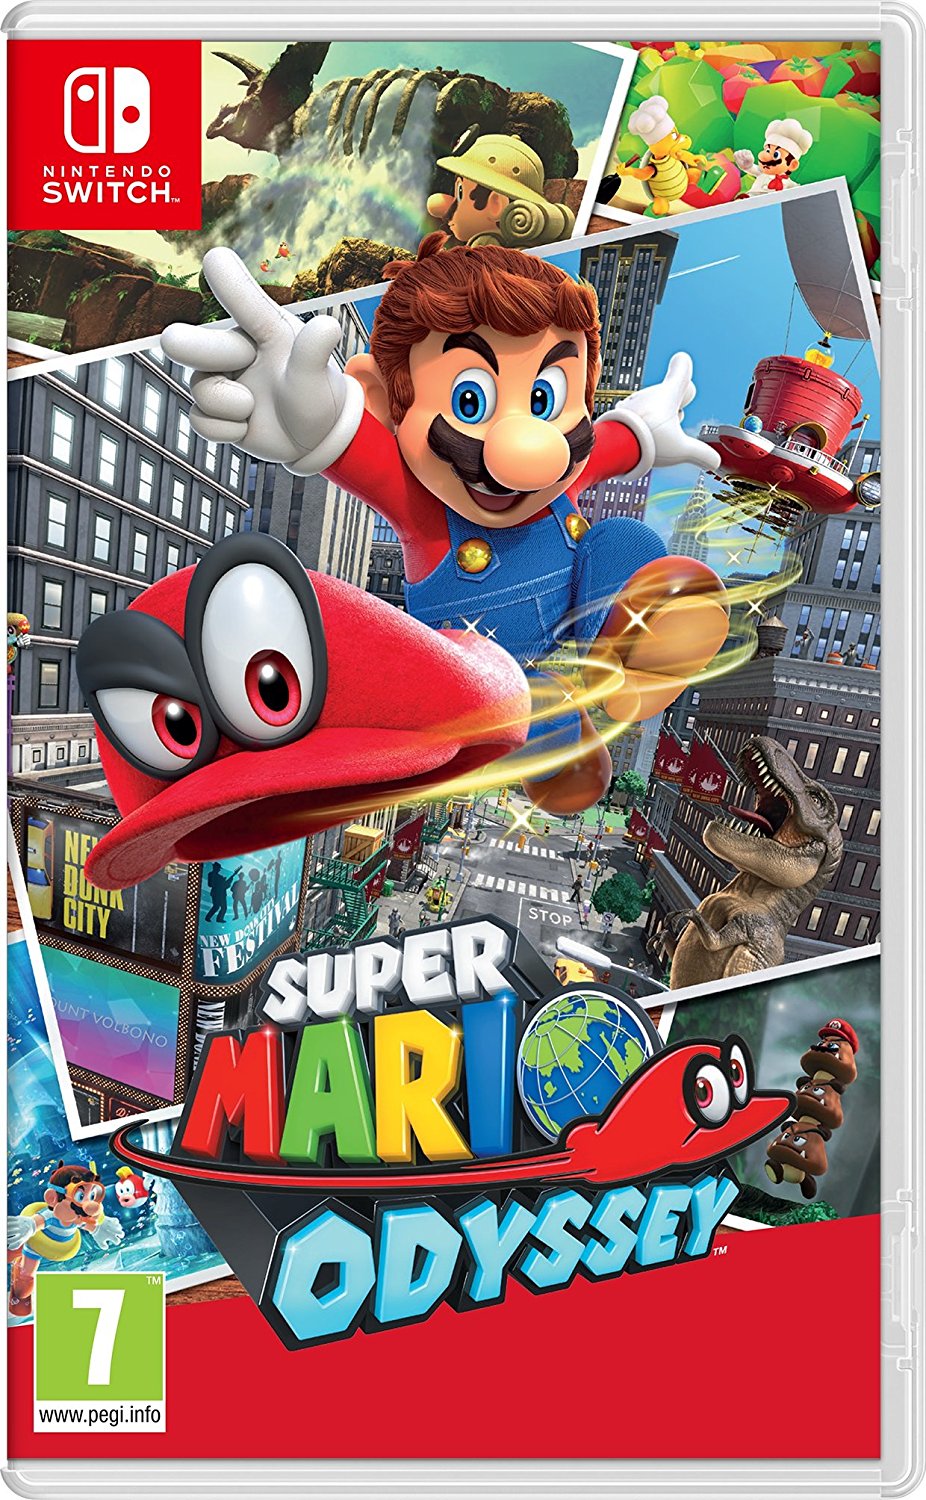 Buy Super Mario Odyssey Wii U TO 50% OFF